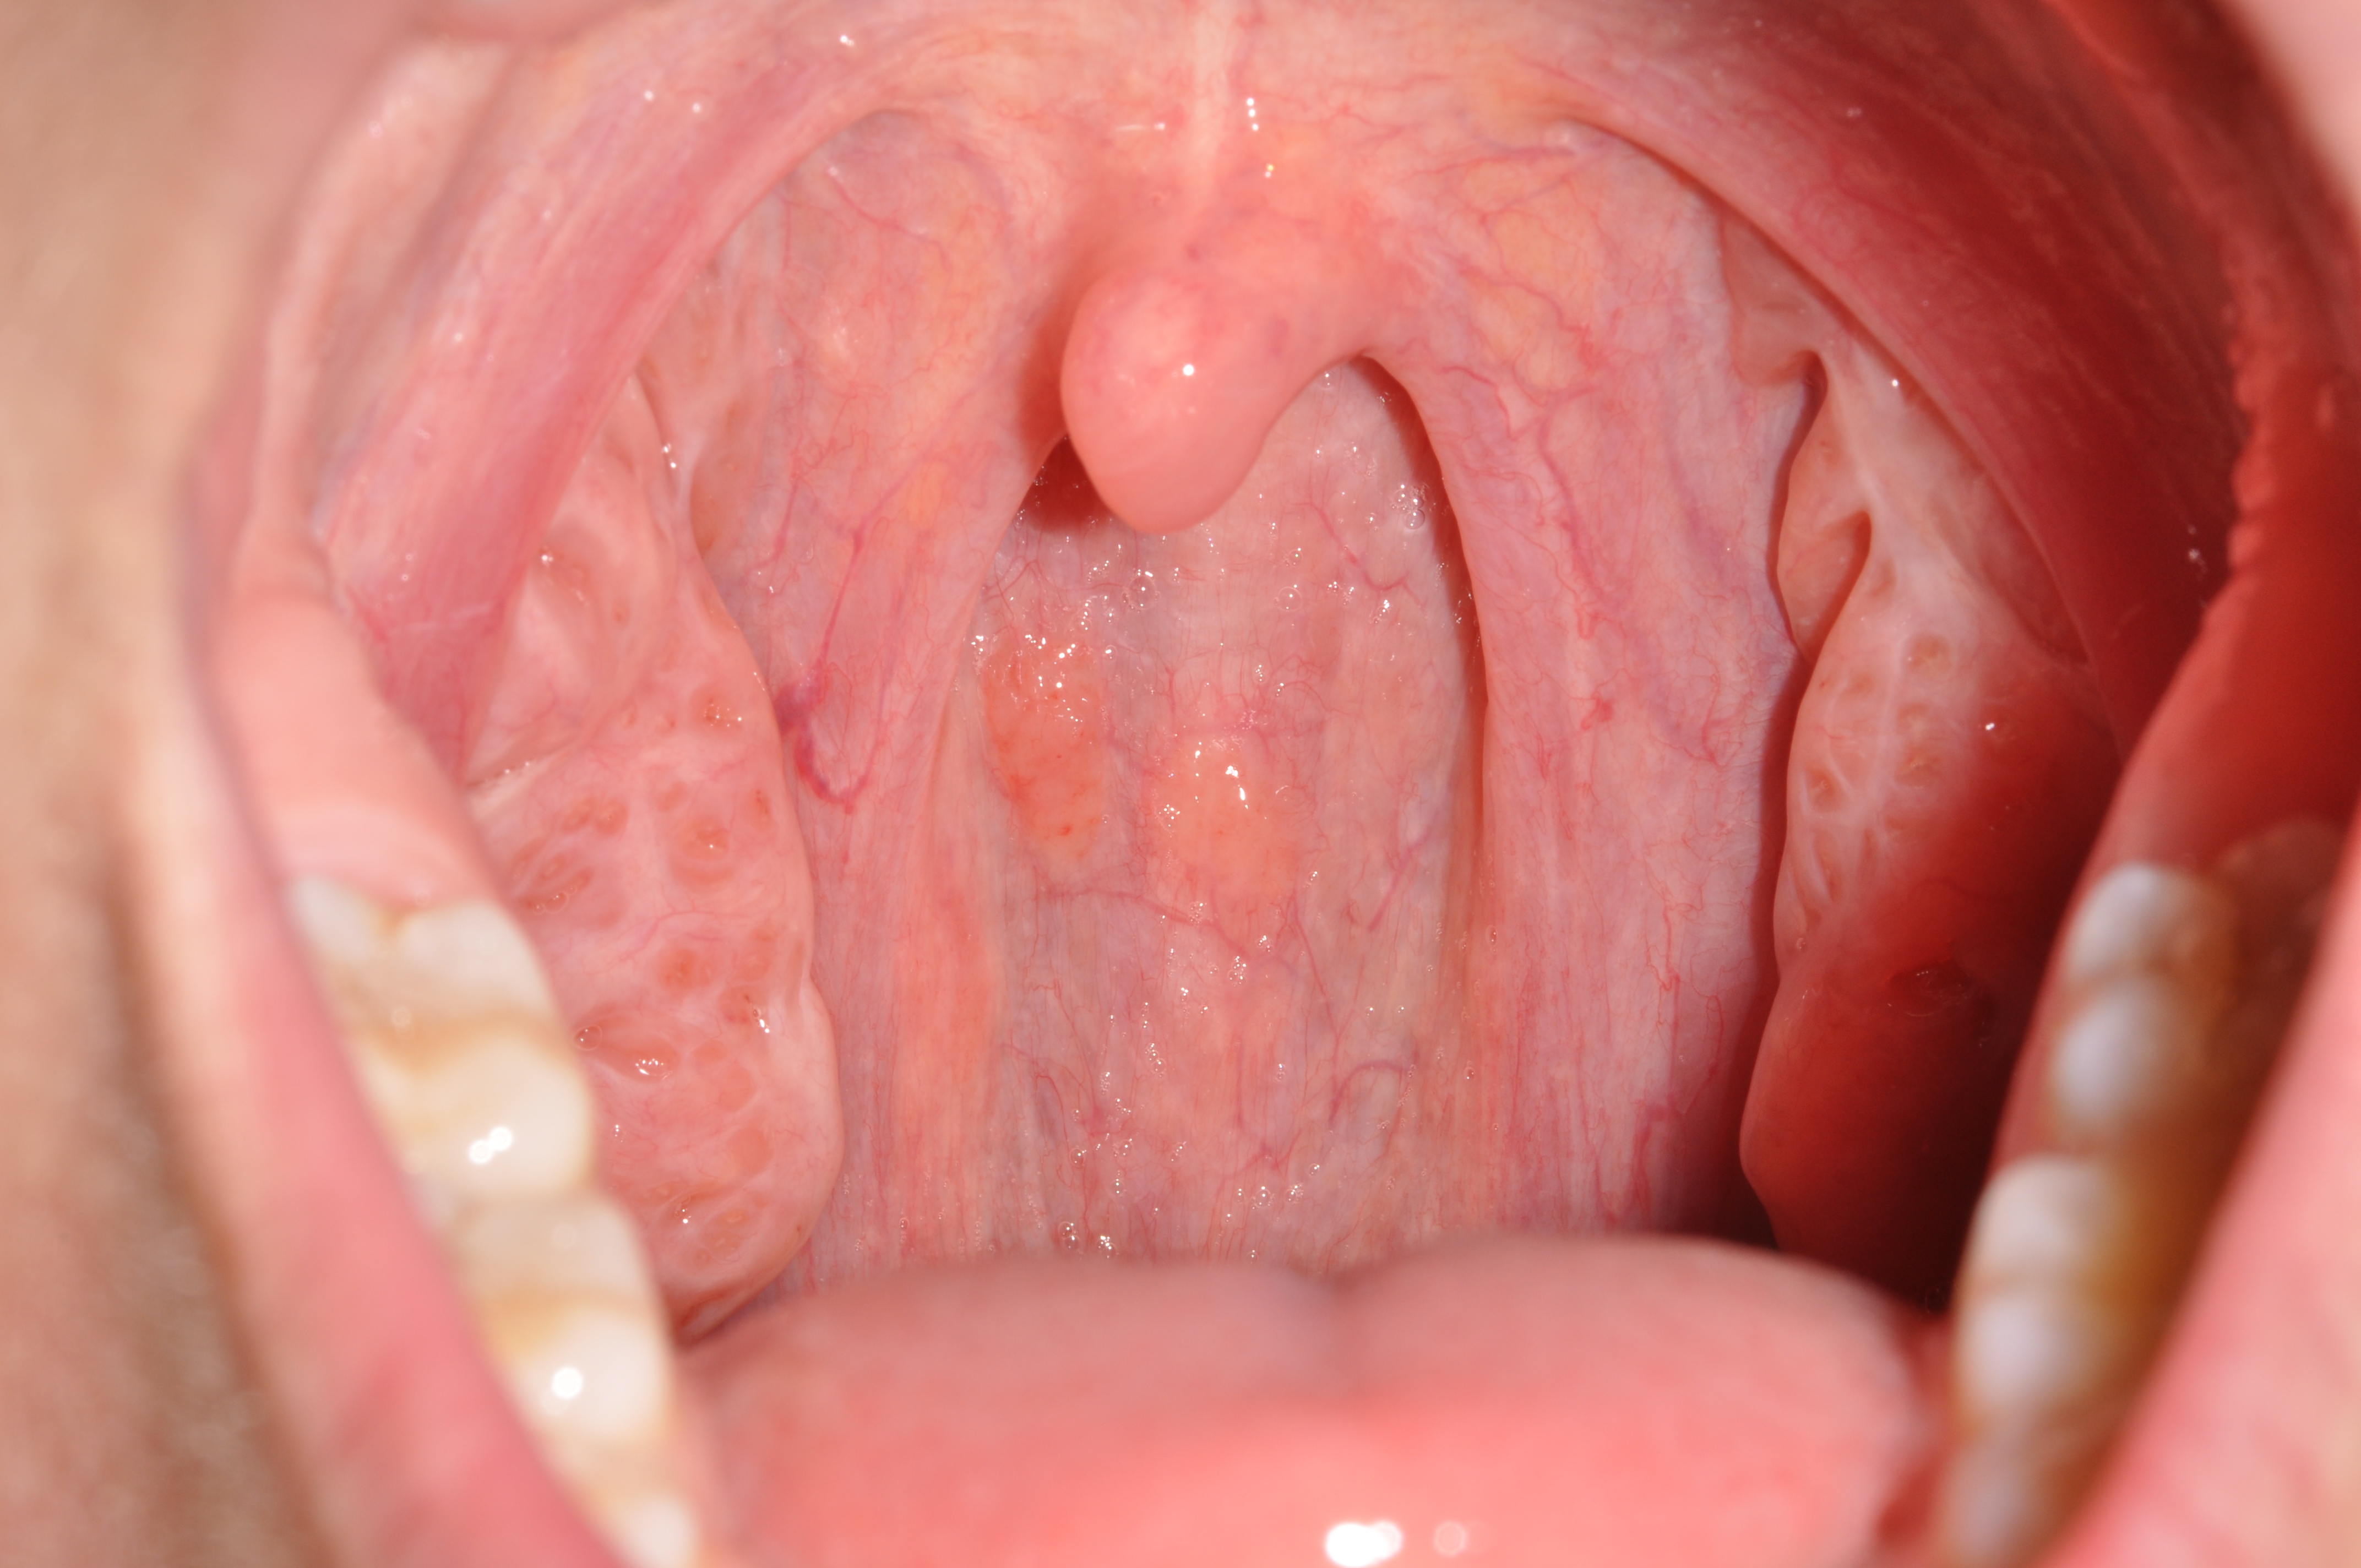 Oral Throat 41